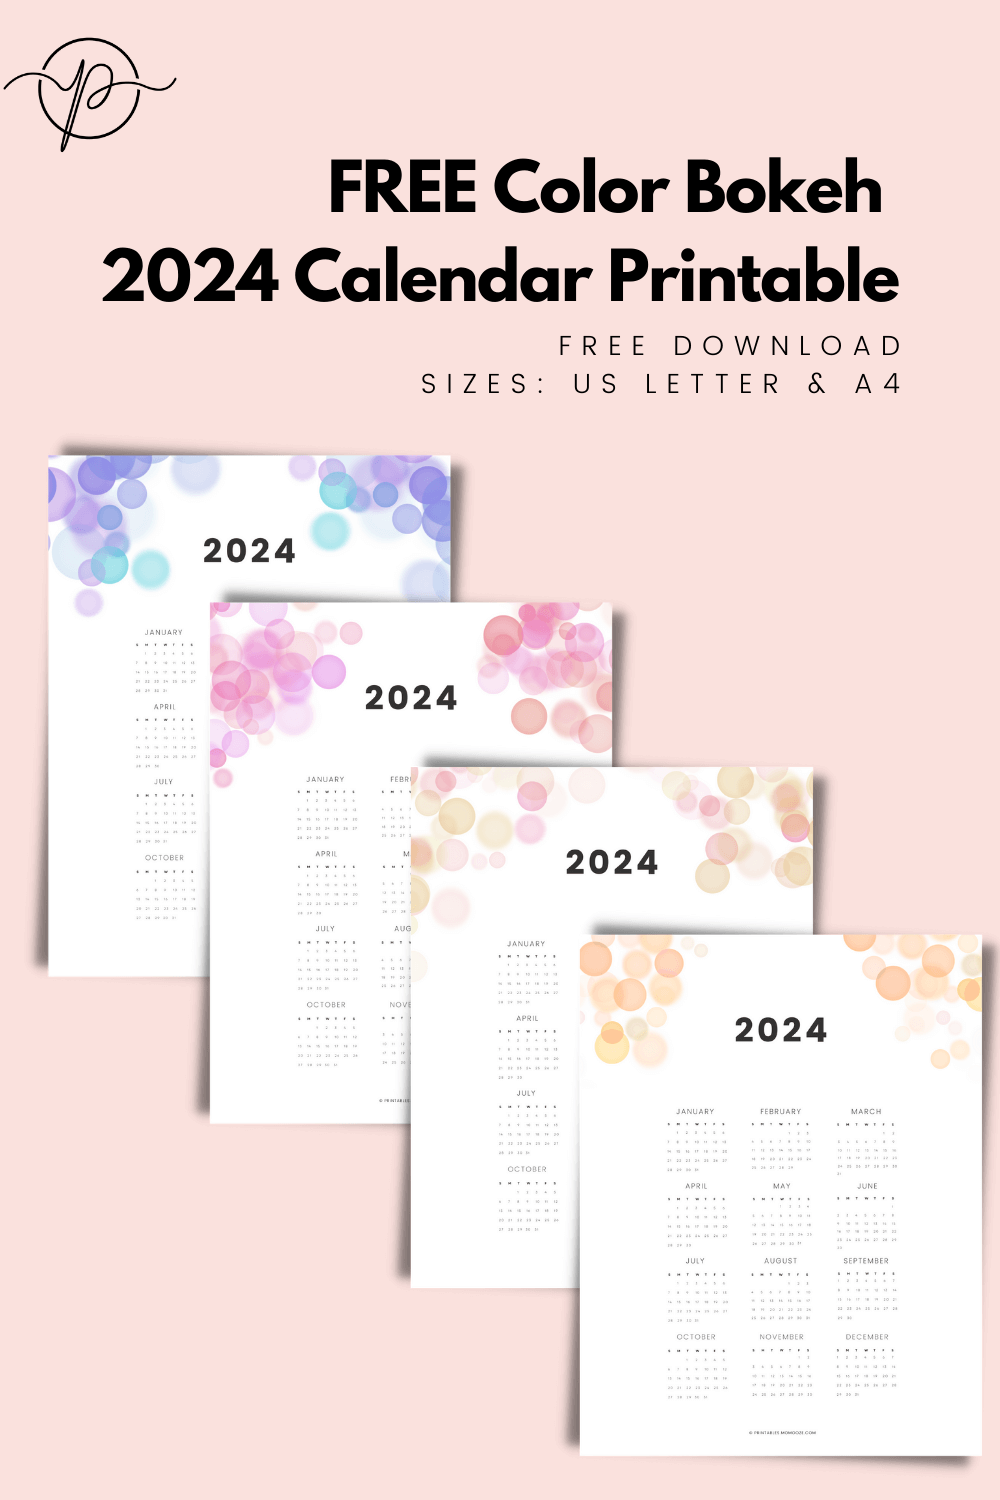 FREE 2024 Calendar Printables 24 Designs